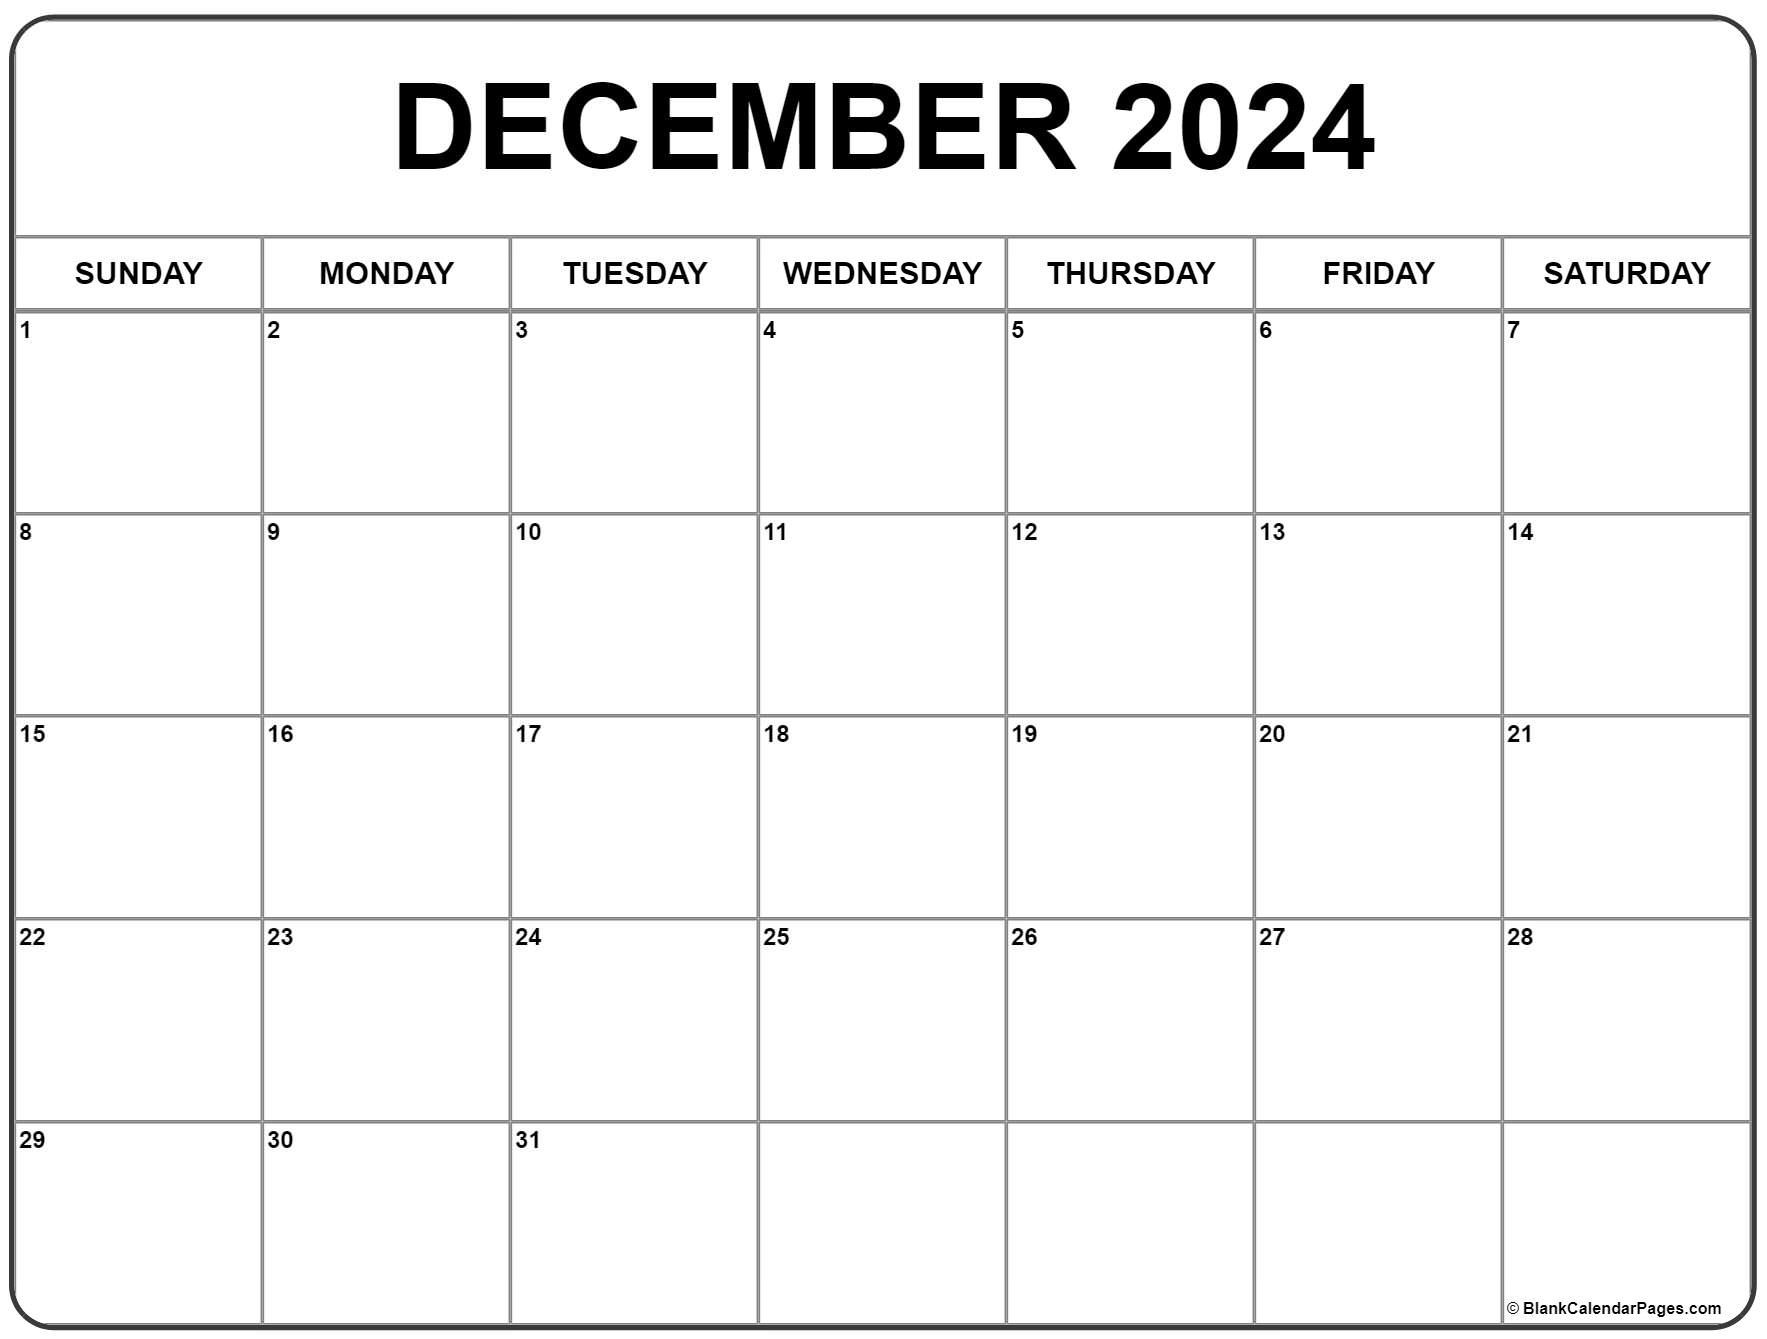 December 2024 Calendar | Free Printable Calendar | Printable Calendar 2024 December